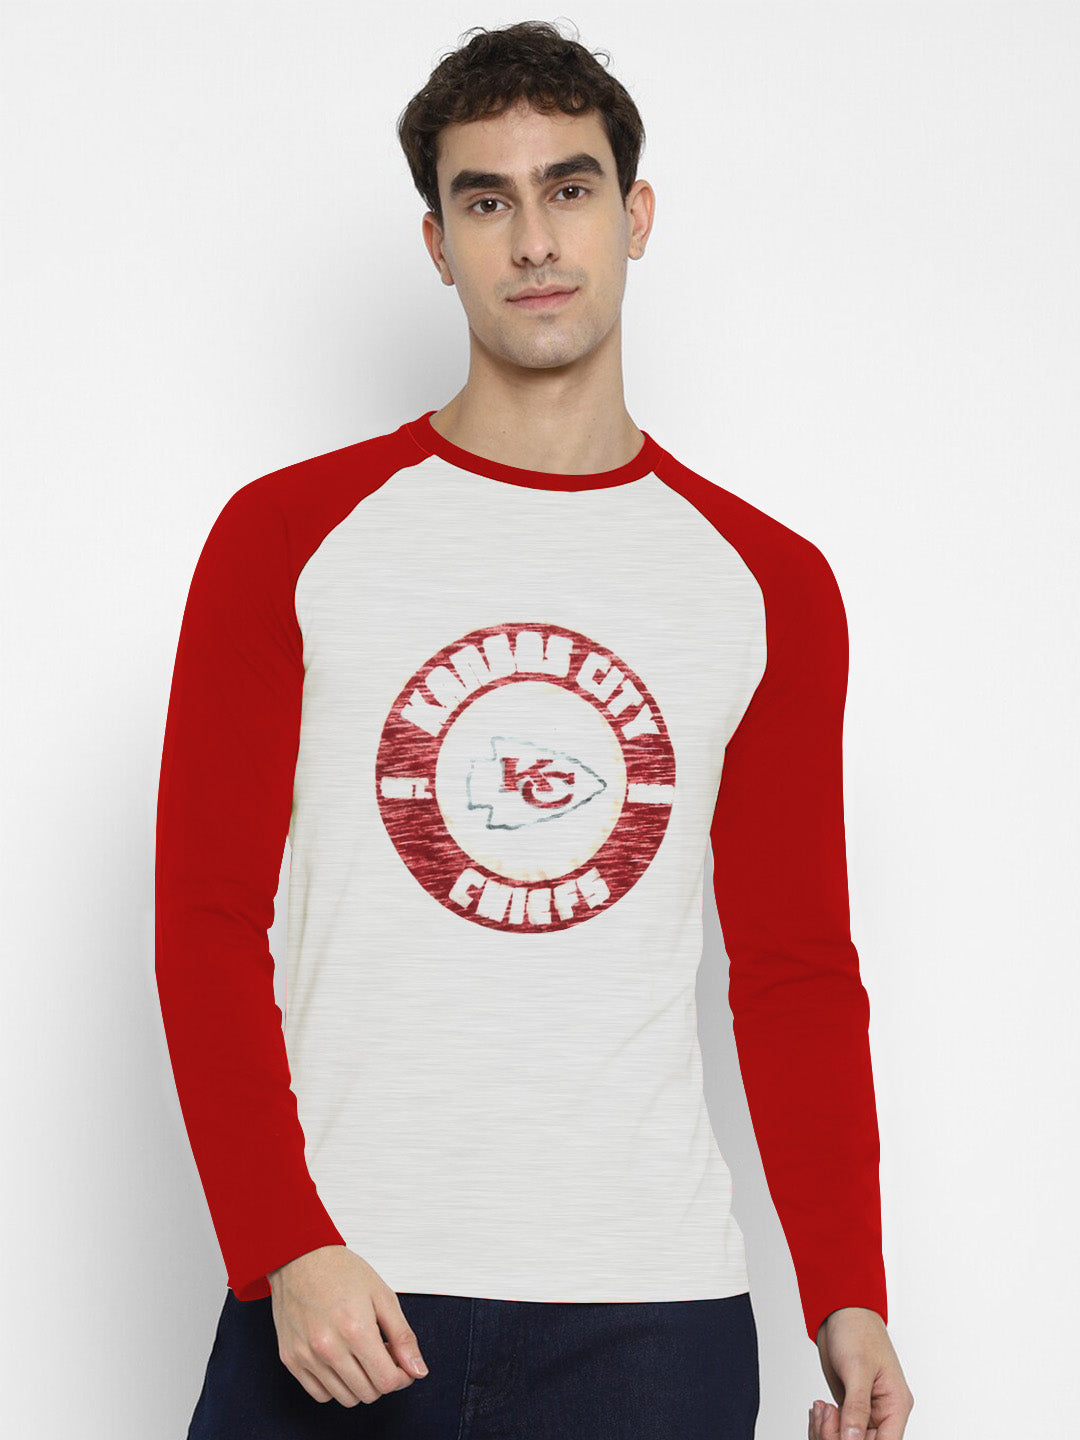 47 Raglan Sleeve Crew Neck Tee Shirt For Men-Off White Melange & Red with Print-SP2079